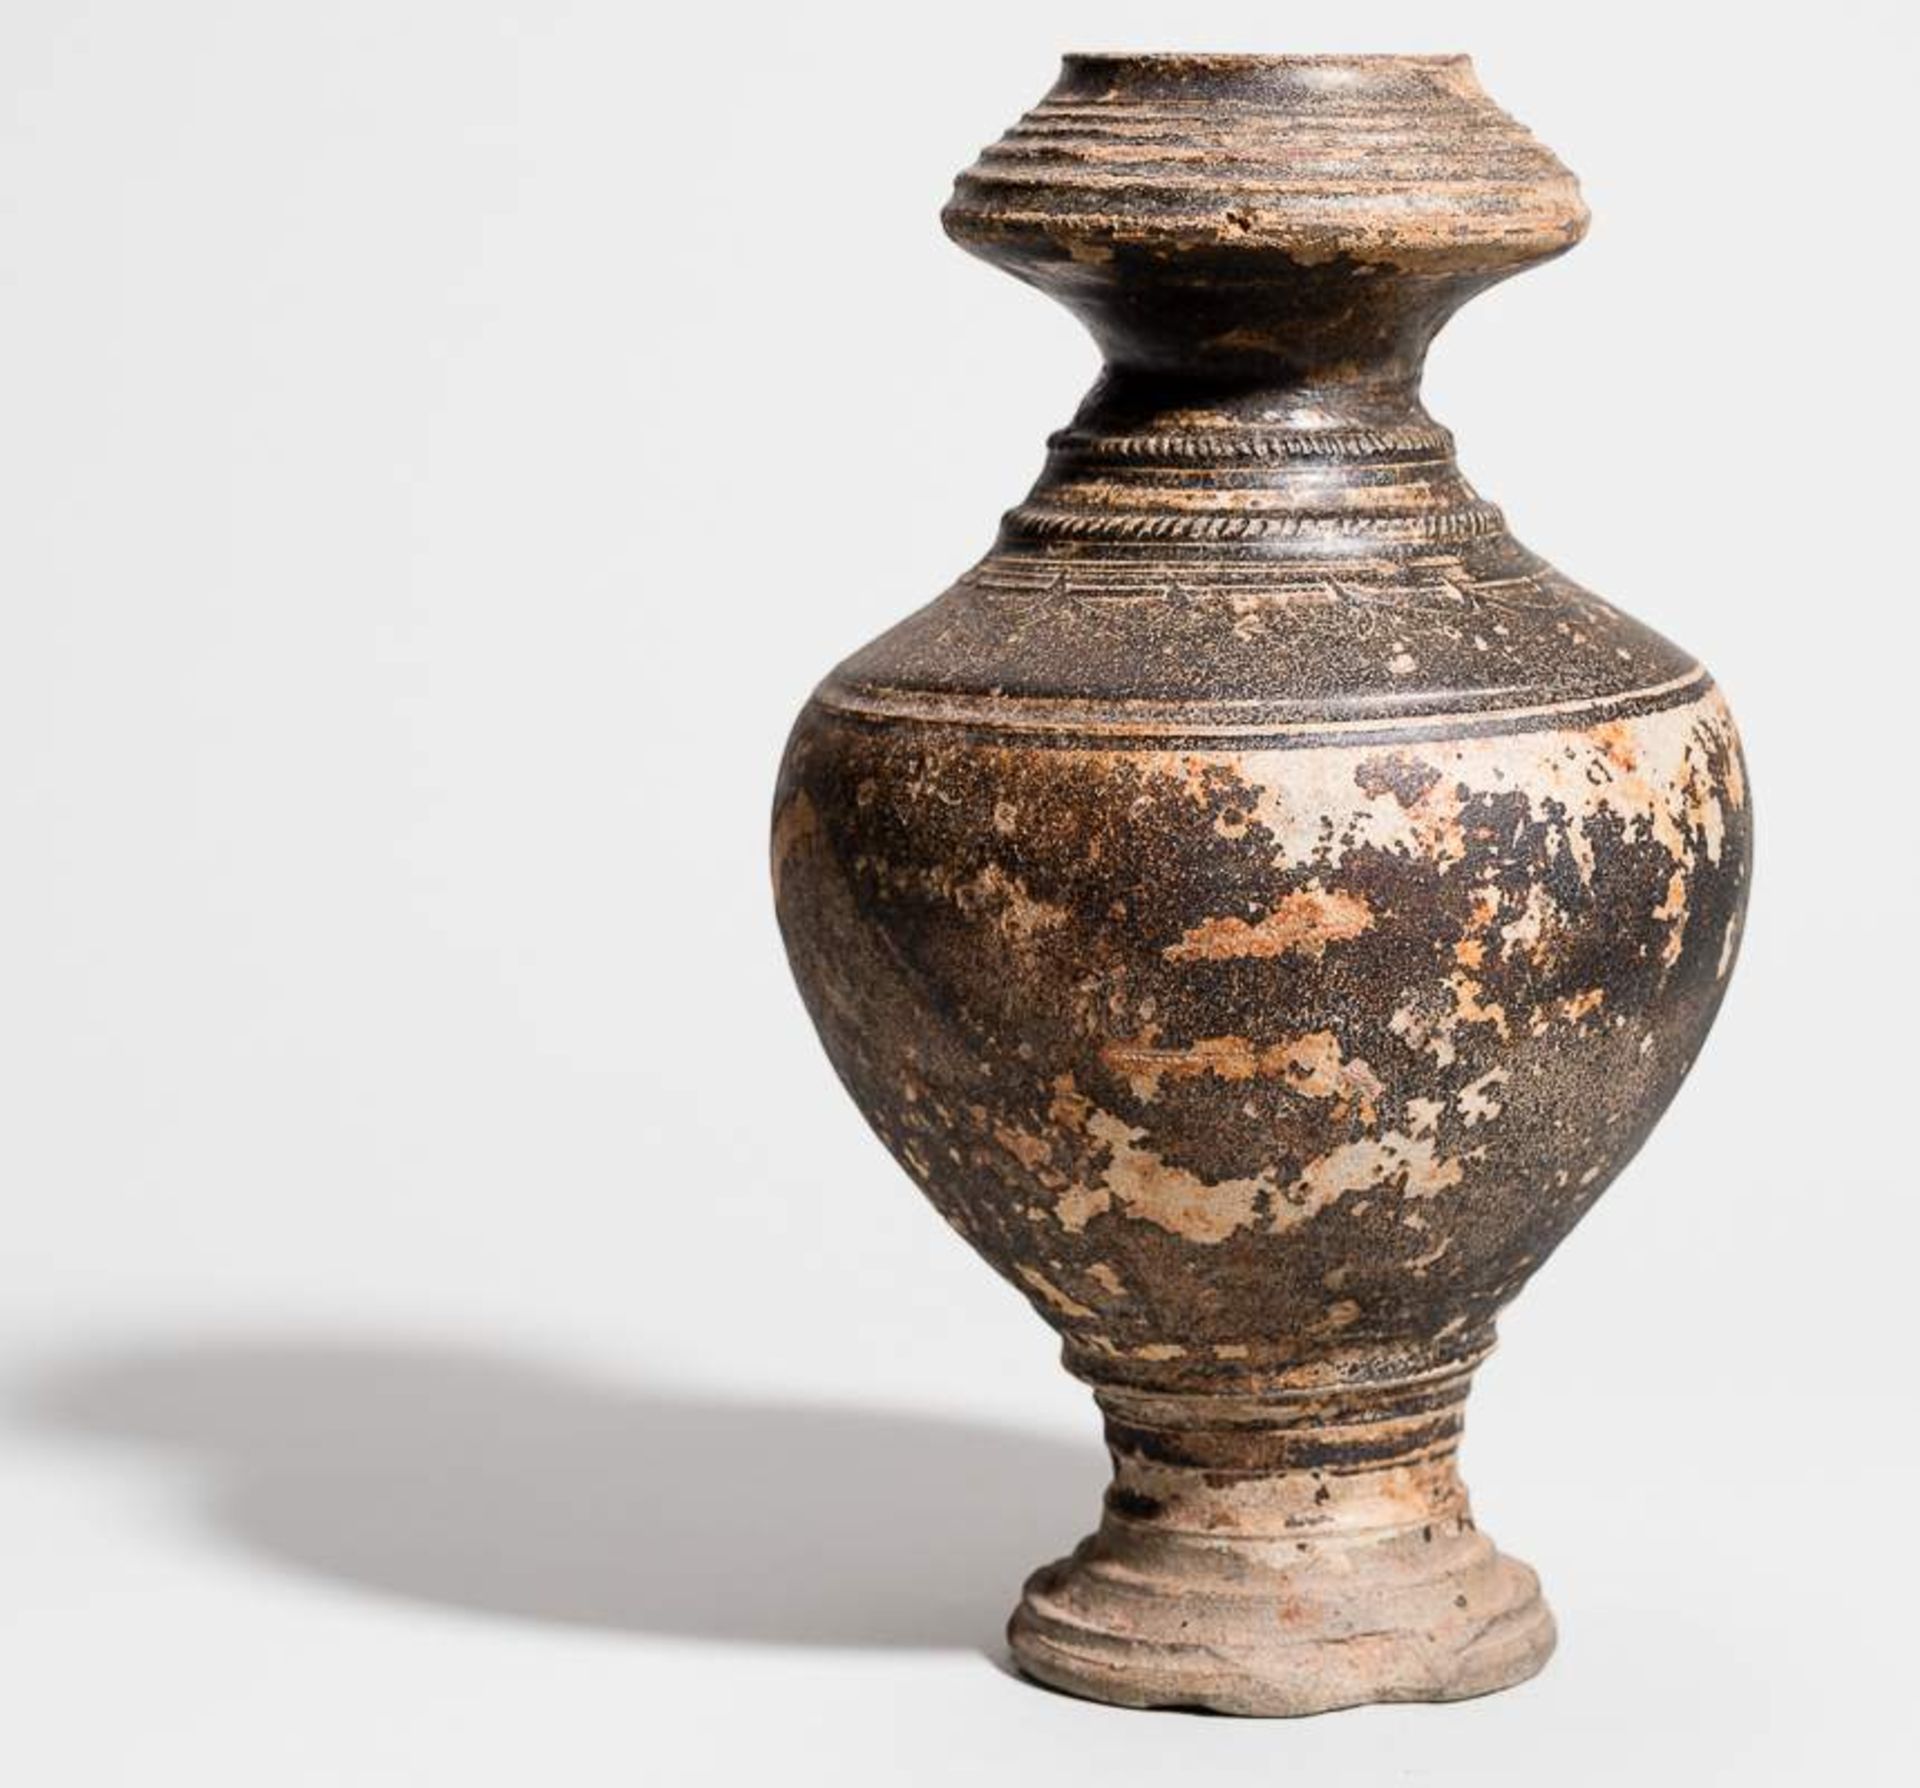 VASENFÖRMIGES GEFÄSS Keramik. Kambodscha, Altes Königreich Khmer, 11. bis 12. Jh. Seltener Typus, - Image 3 of 11